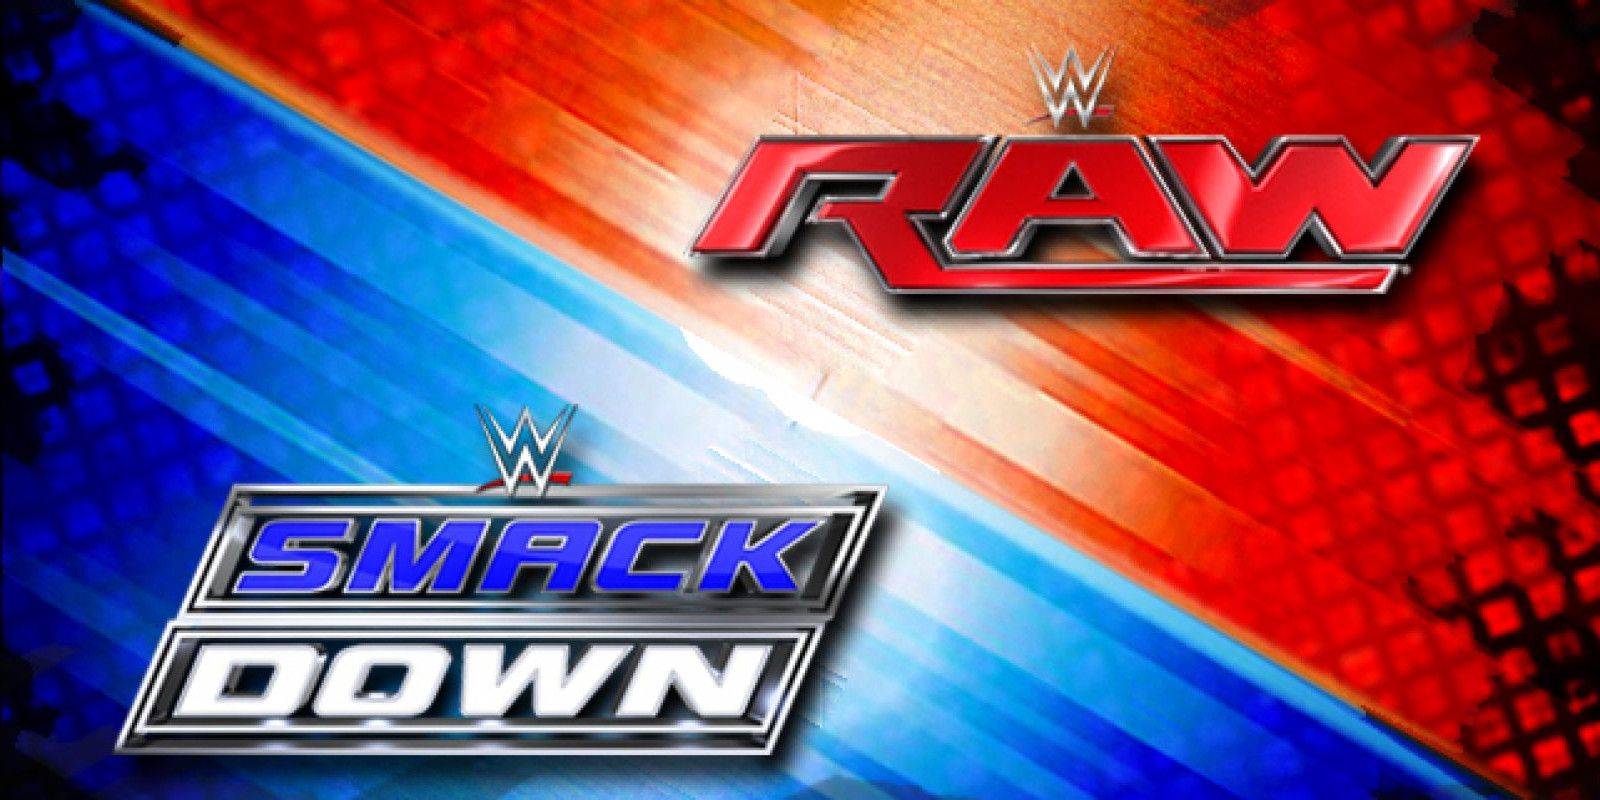 WWE Smackdown vs Raw